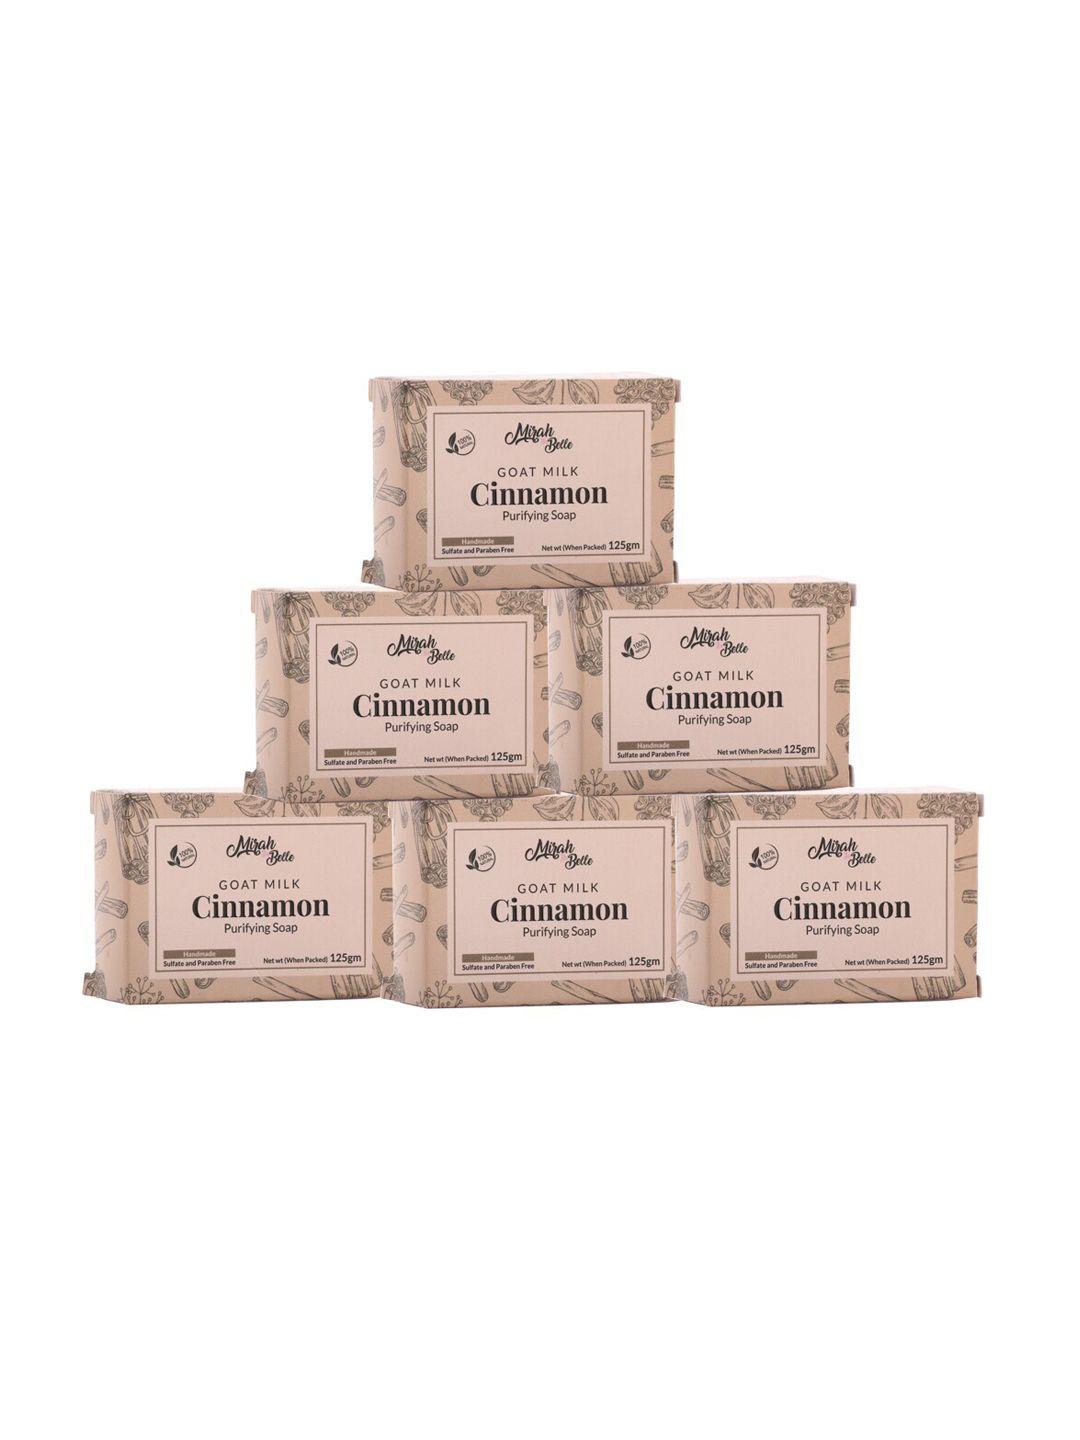 mirah belle set of 6 organic goat milk cinnamon purifying soaps